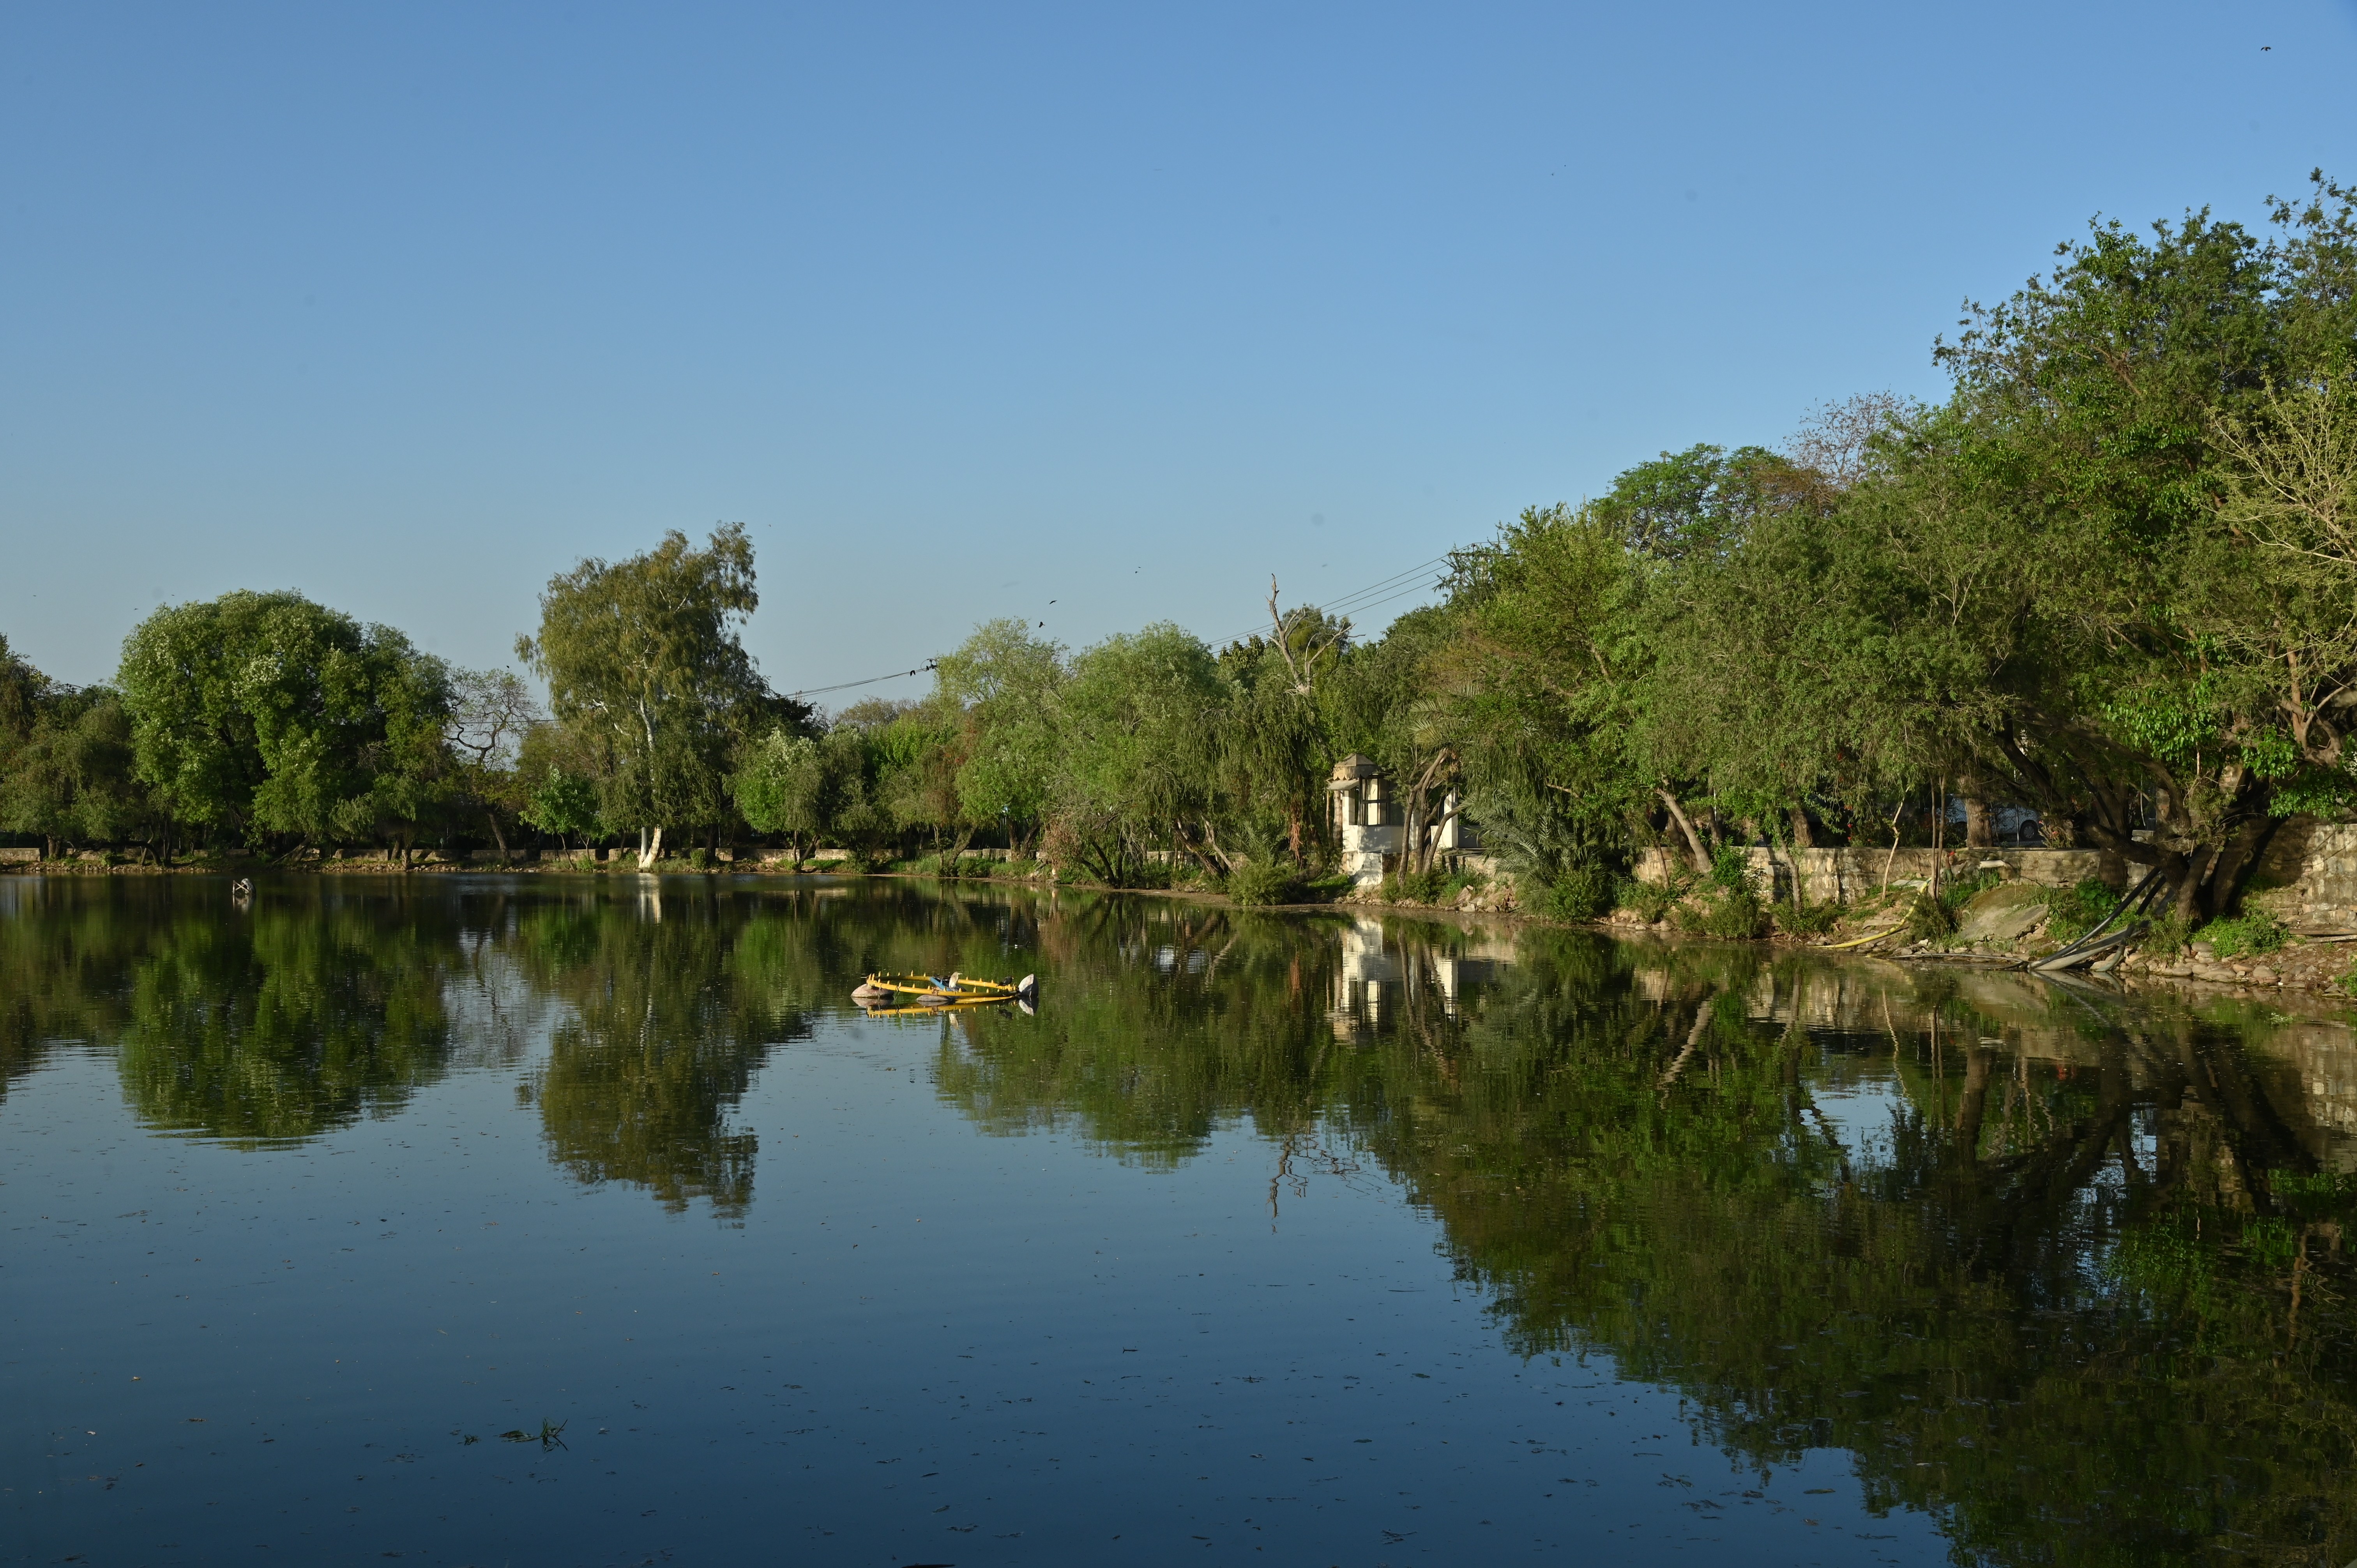 The lake of Ayub Park